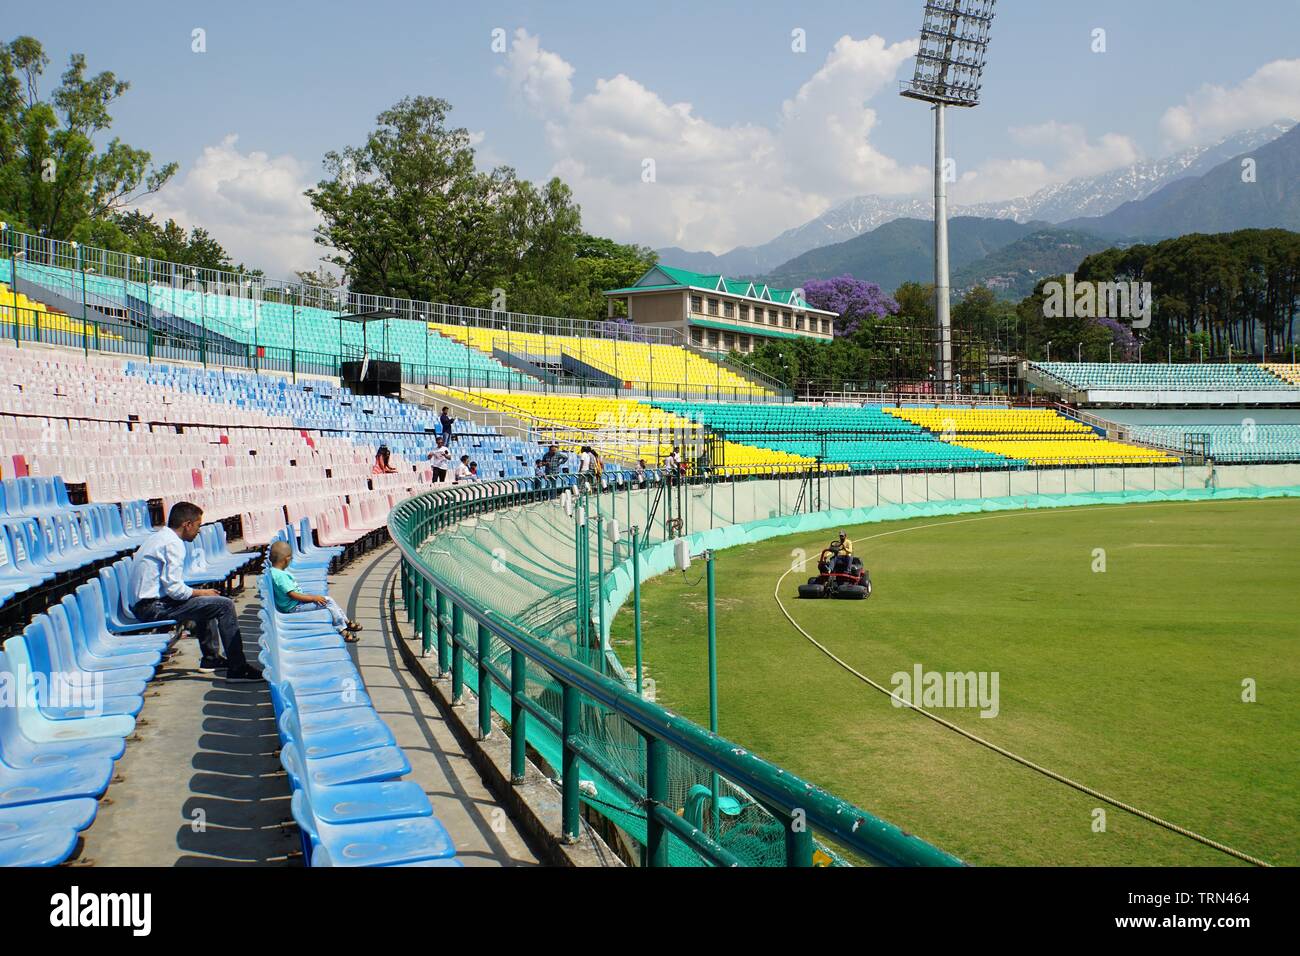 Scenic Himachal Pradesh Cricket Stadium on a Sunny Day Stock Photo